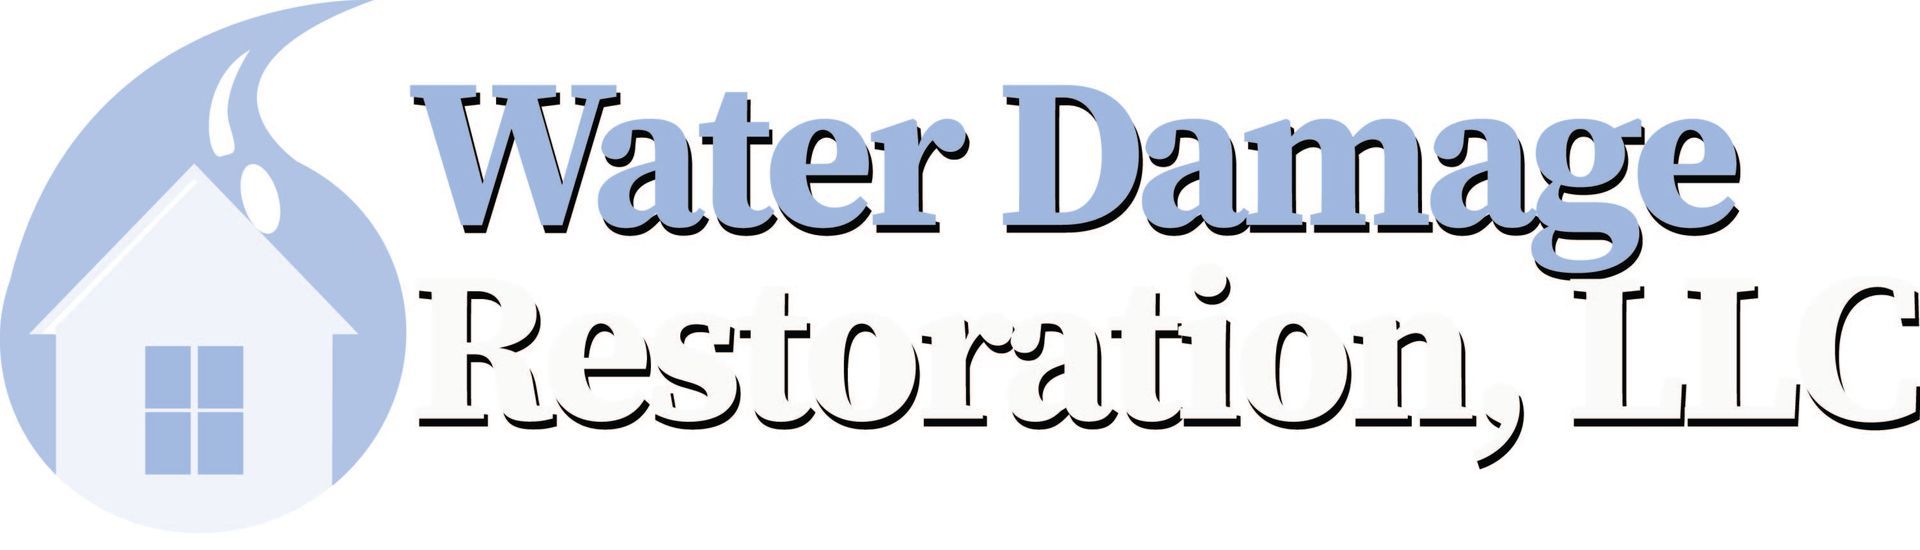 Water Damage Restoration LLC - Logo